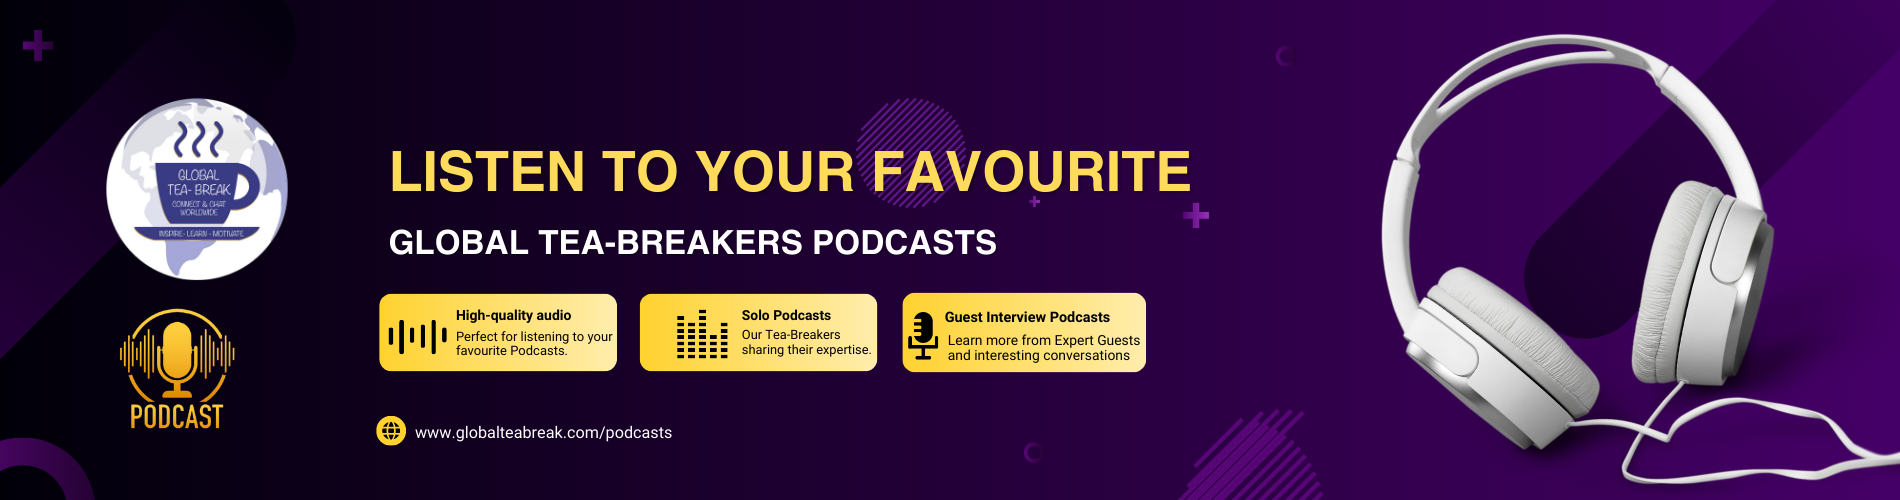 Global Tea-Breakers Podcasts